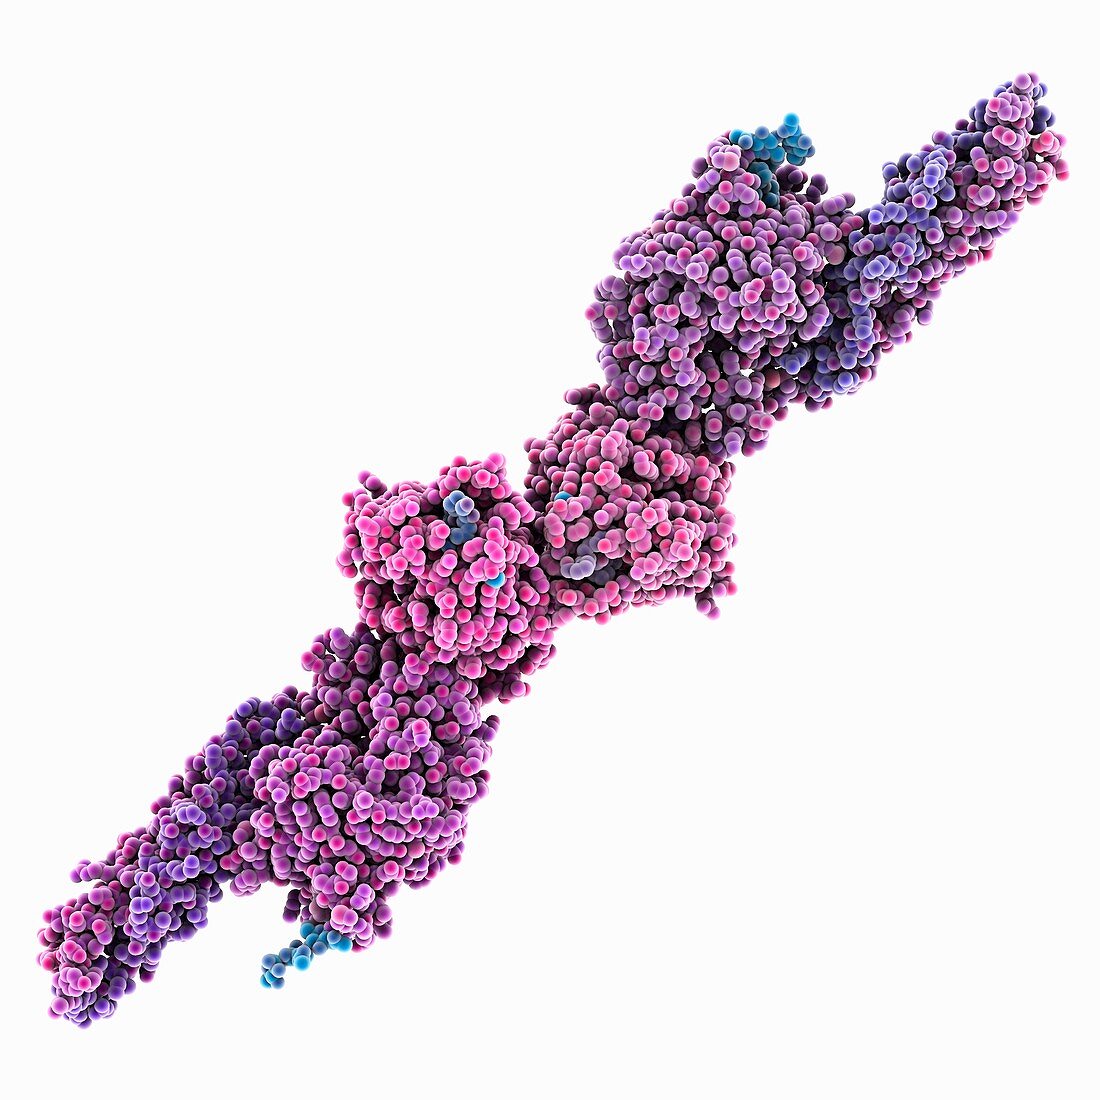 Fibrin protein, molecular model